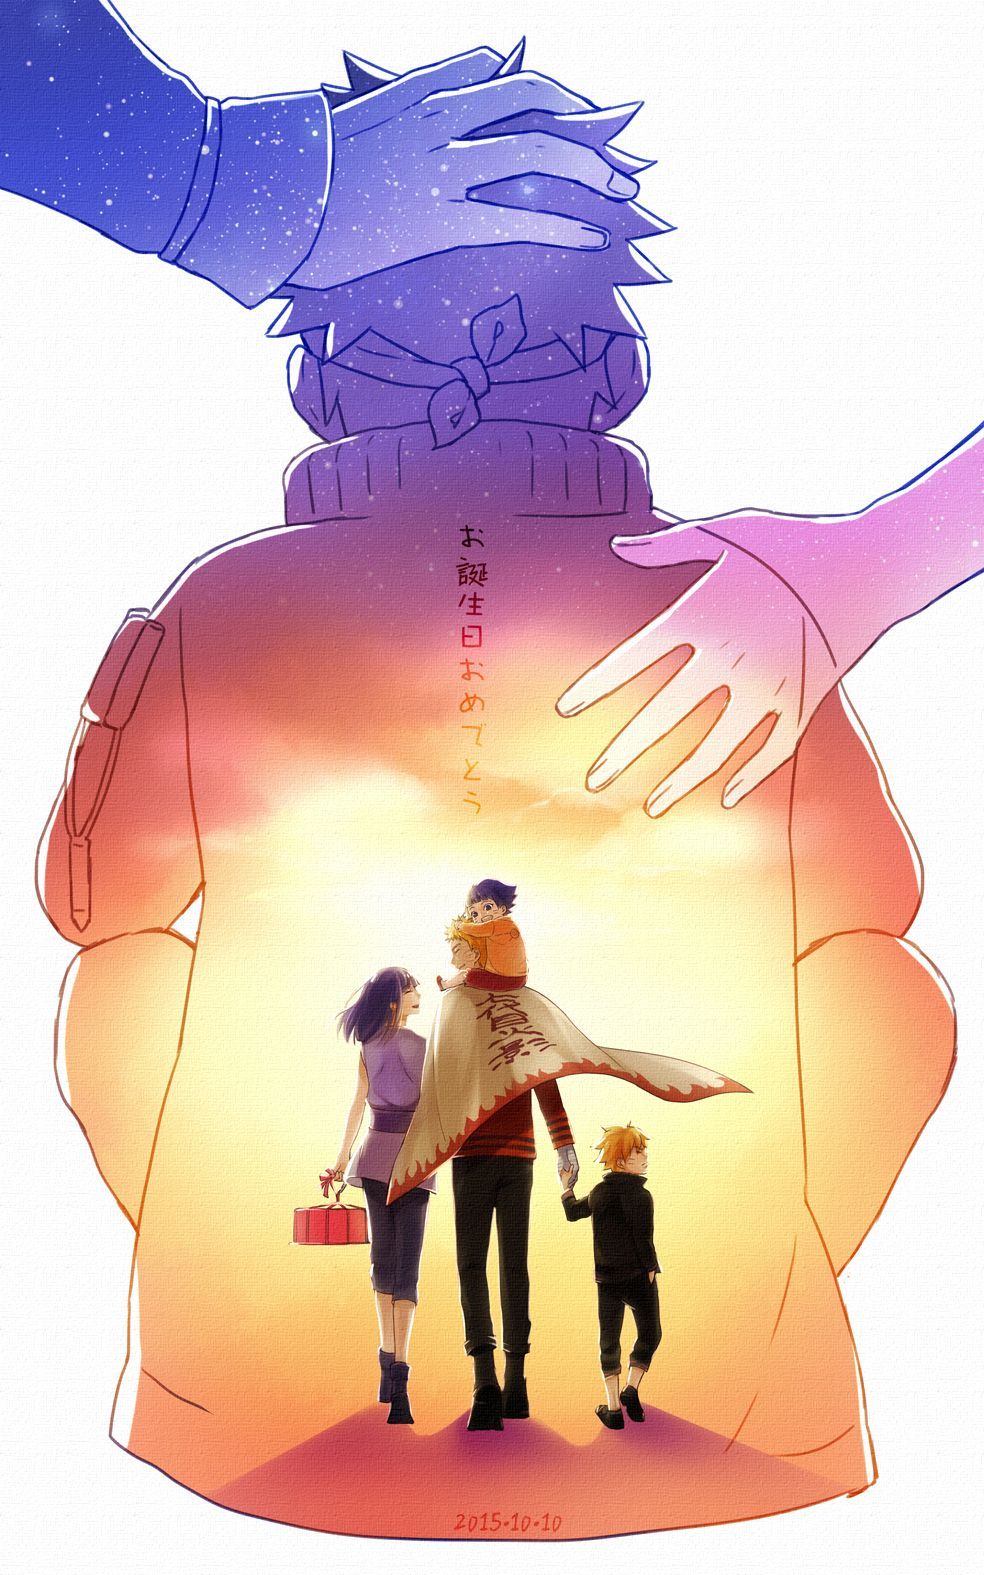 Top 5 Family-Friendly Anime